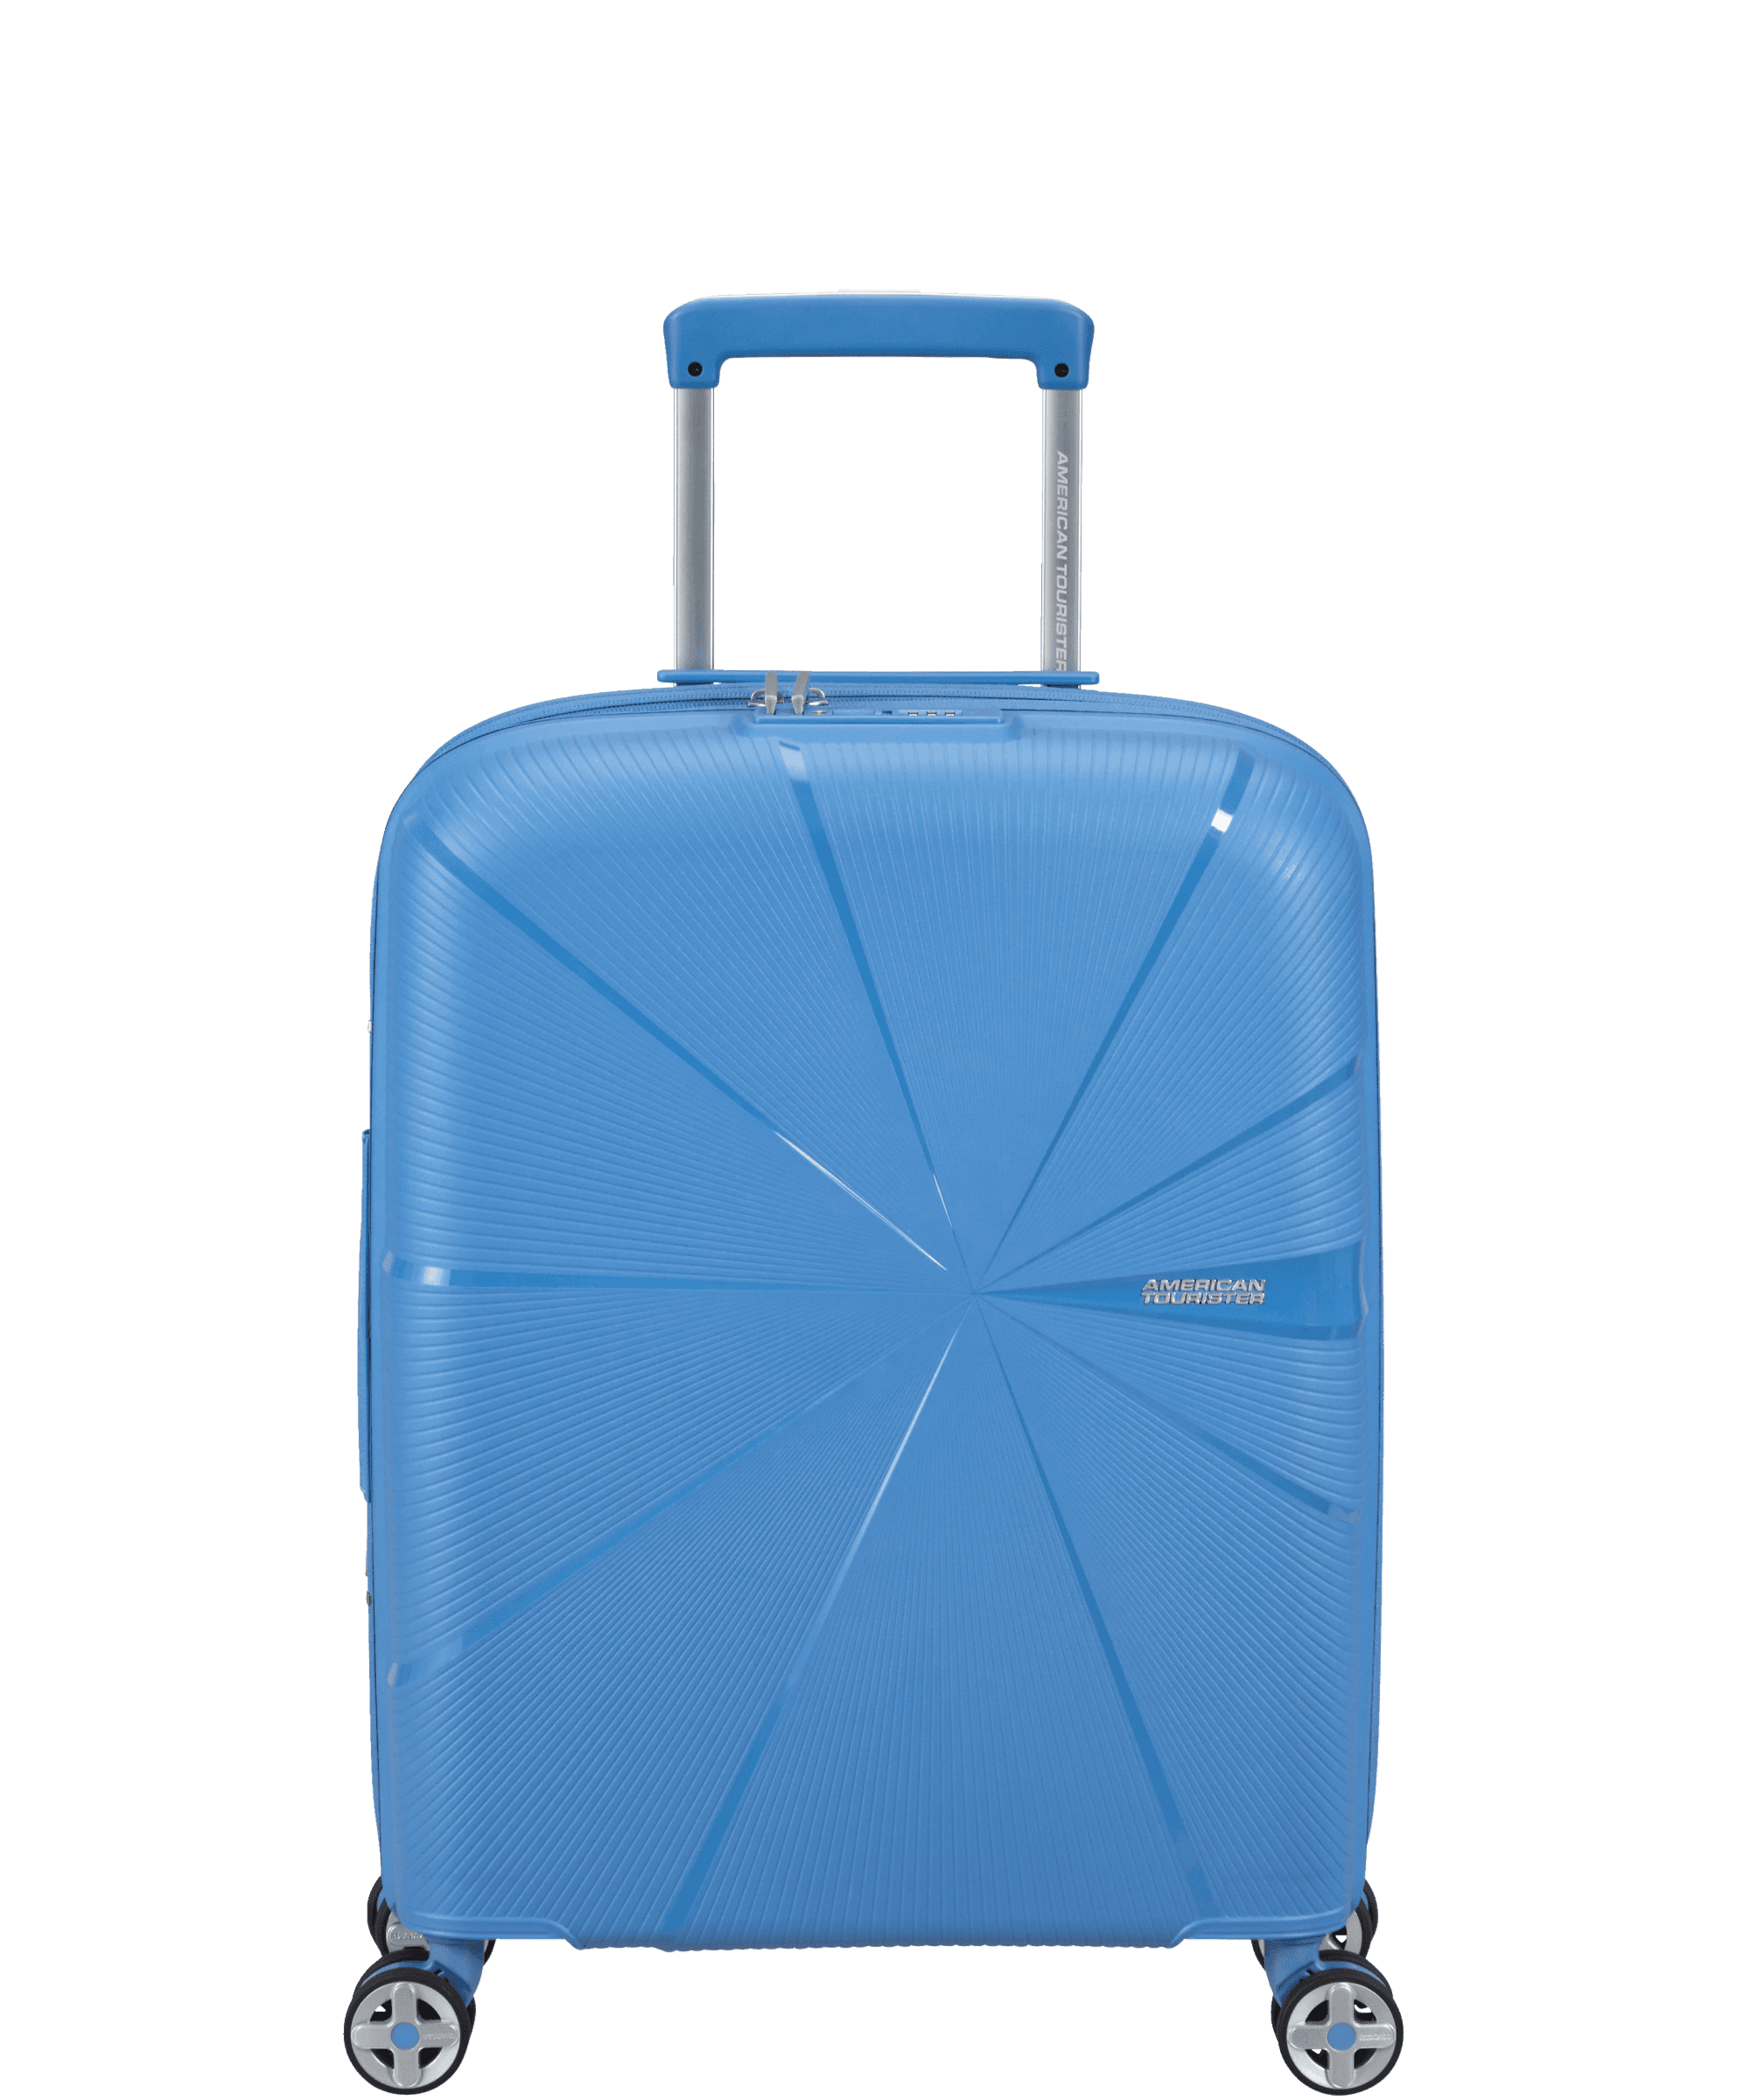 Luggage Trolley Samsonite - PoppinsBags